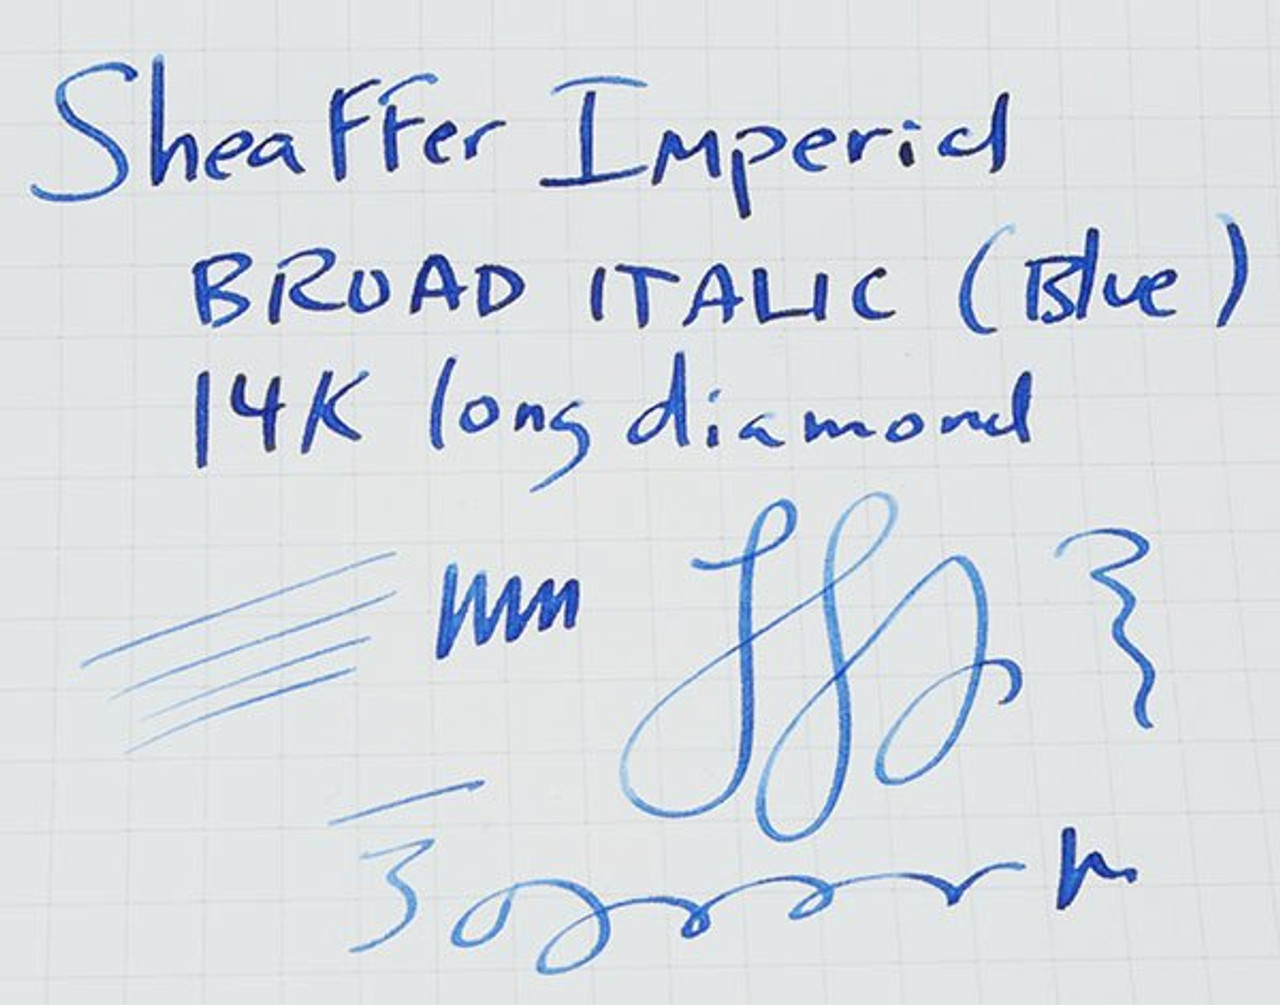 Sheaffer 14k Imperial Long Diamond Nib in Blue - Broad Cursive Italic Grind